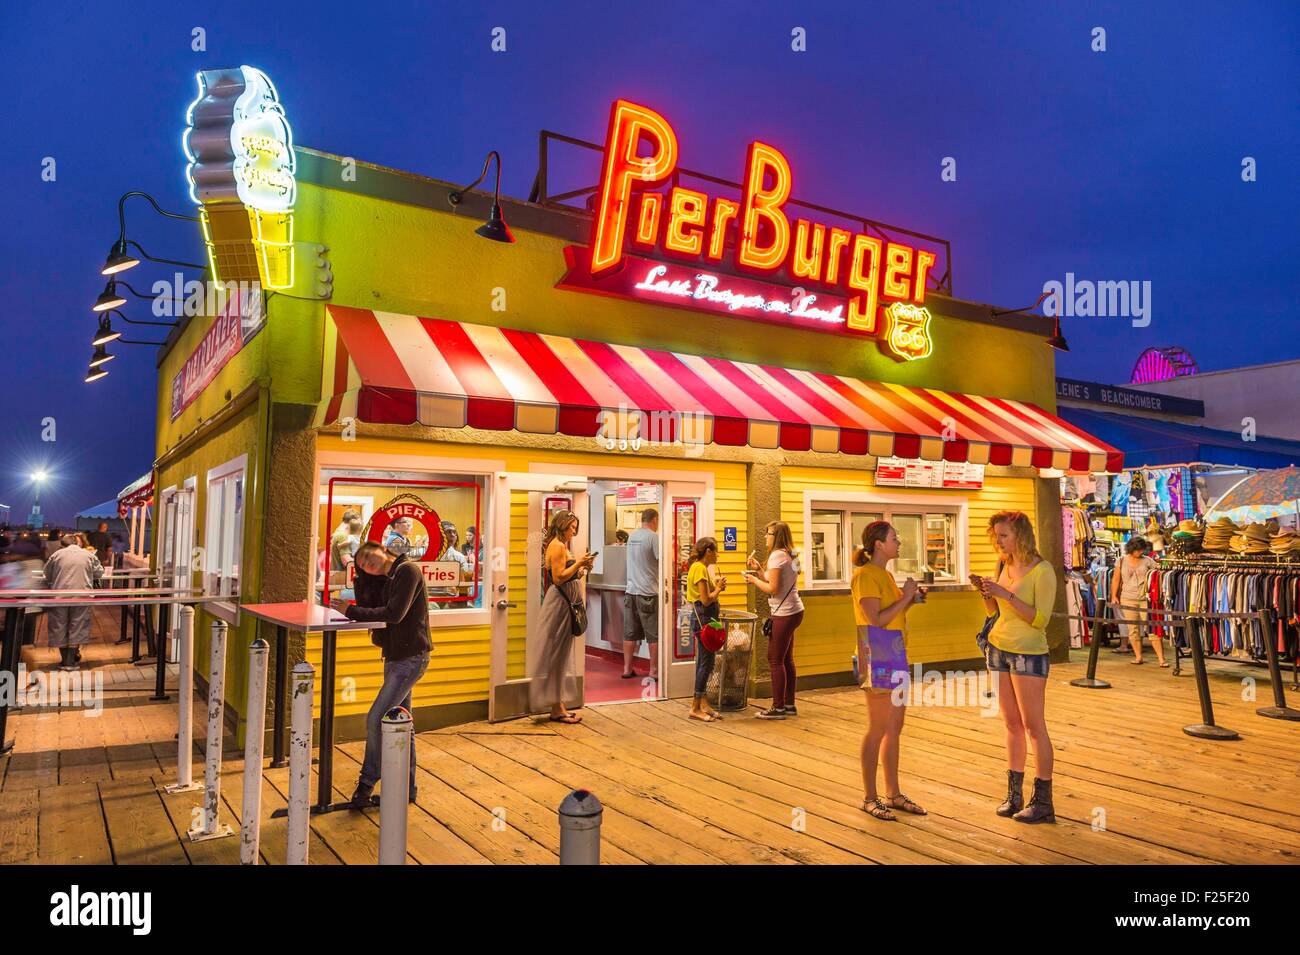 United States, California, Los Angeles, Santa Monica, Santa Monica Pier, Pier Burger Restaurant Banque D'Images